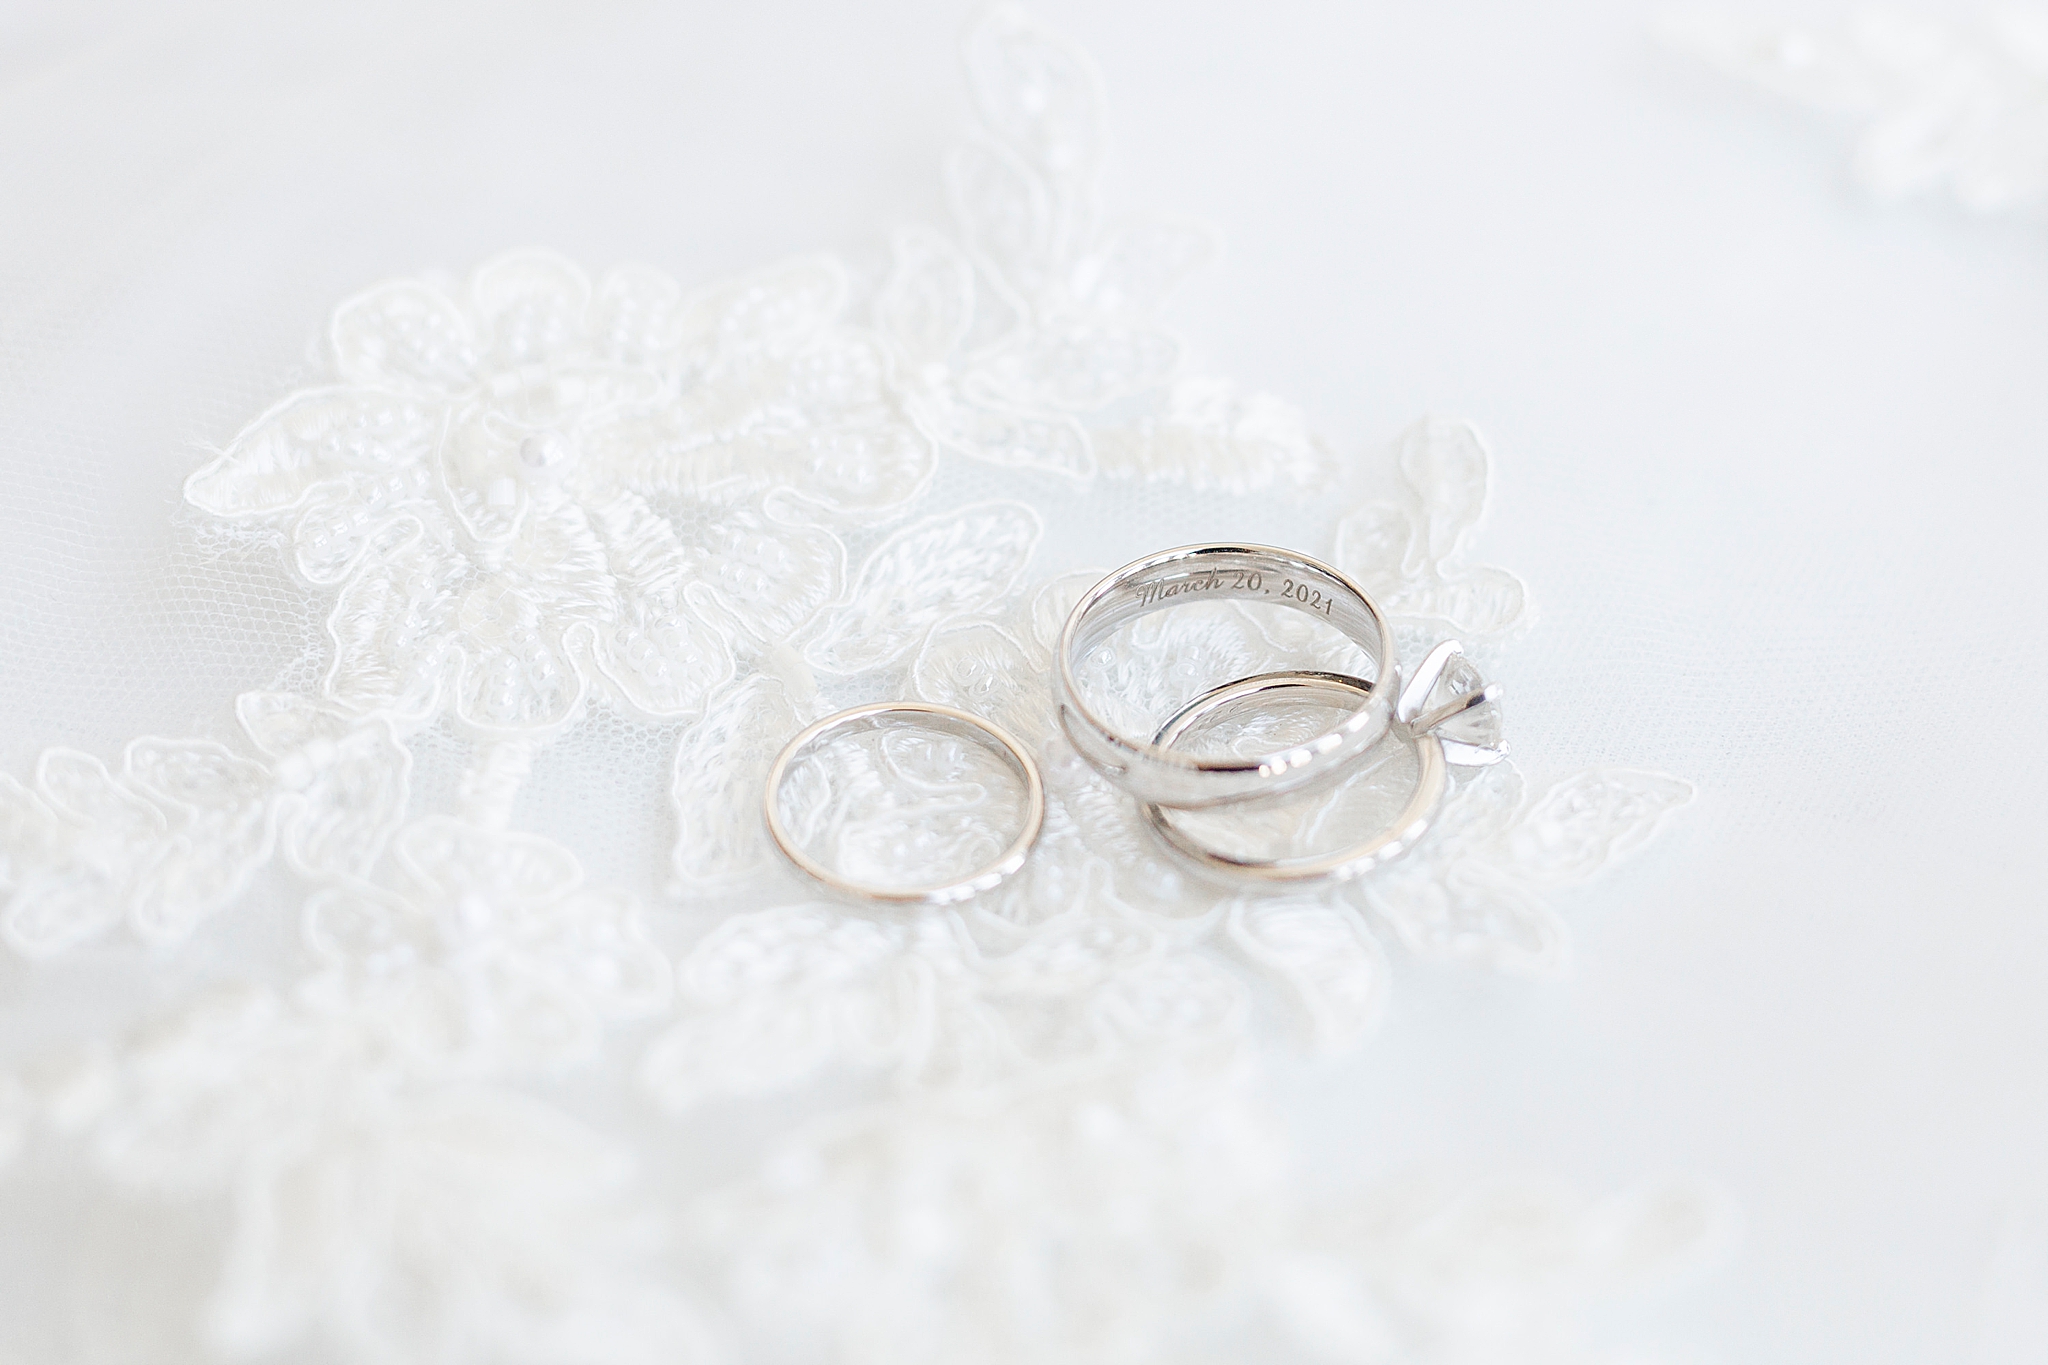 wedding rings lay on bride's wedding dress